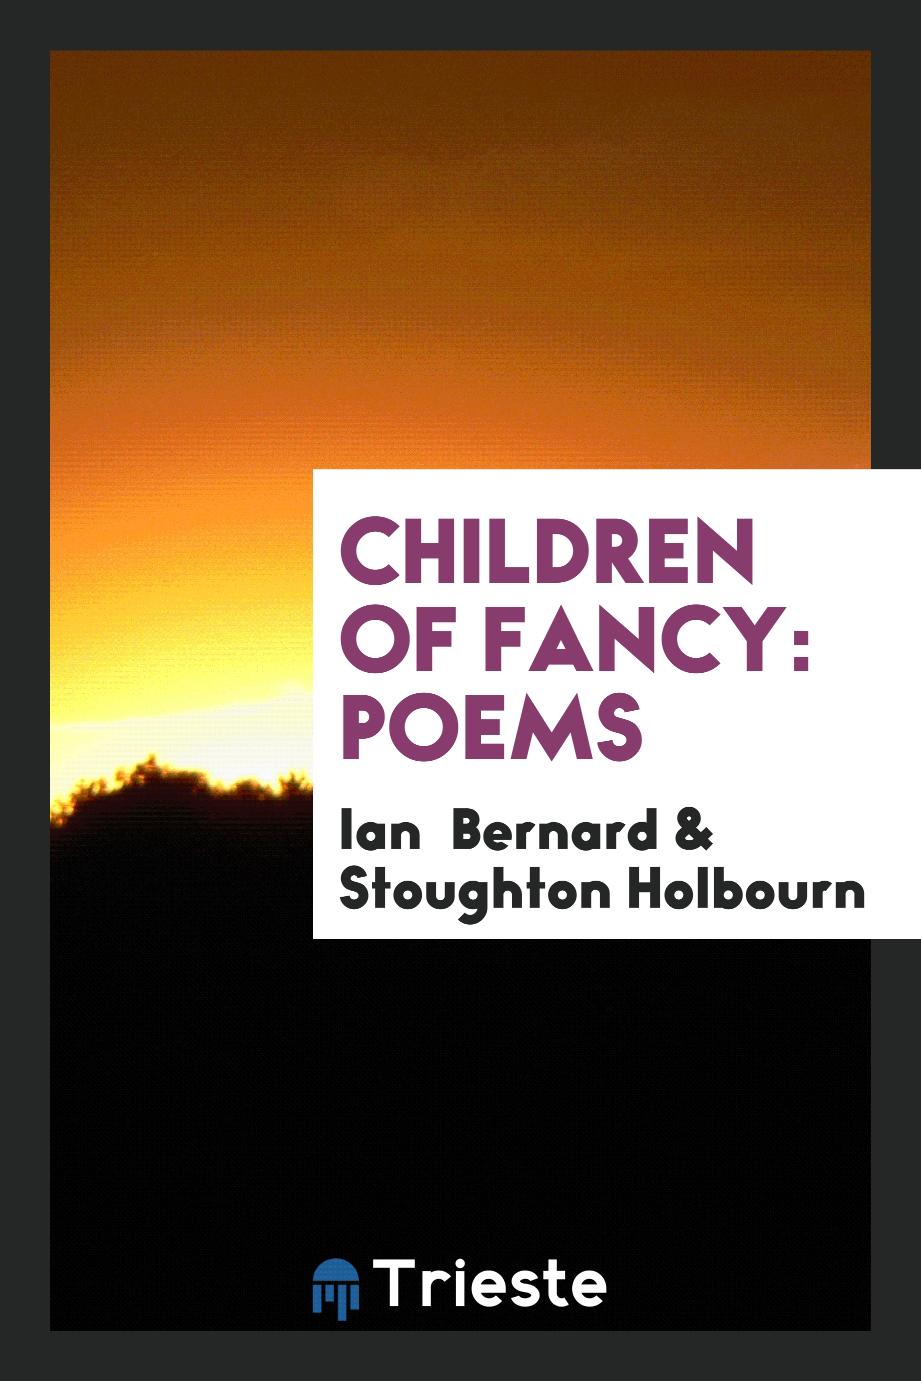 Children of fancy: poems